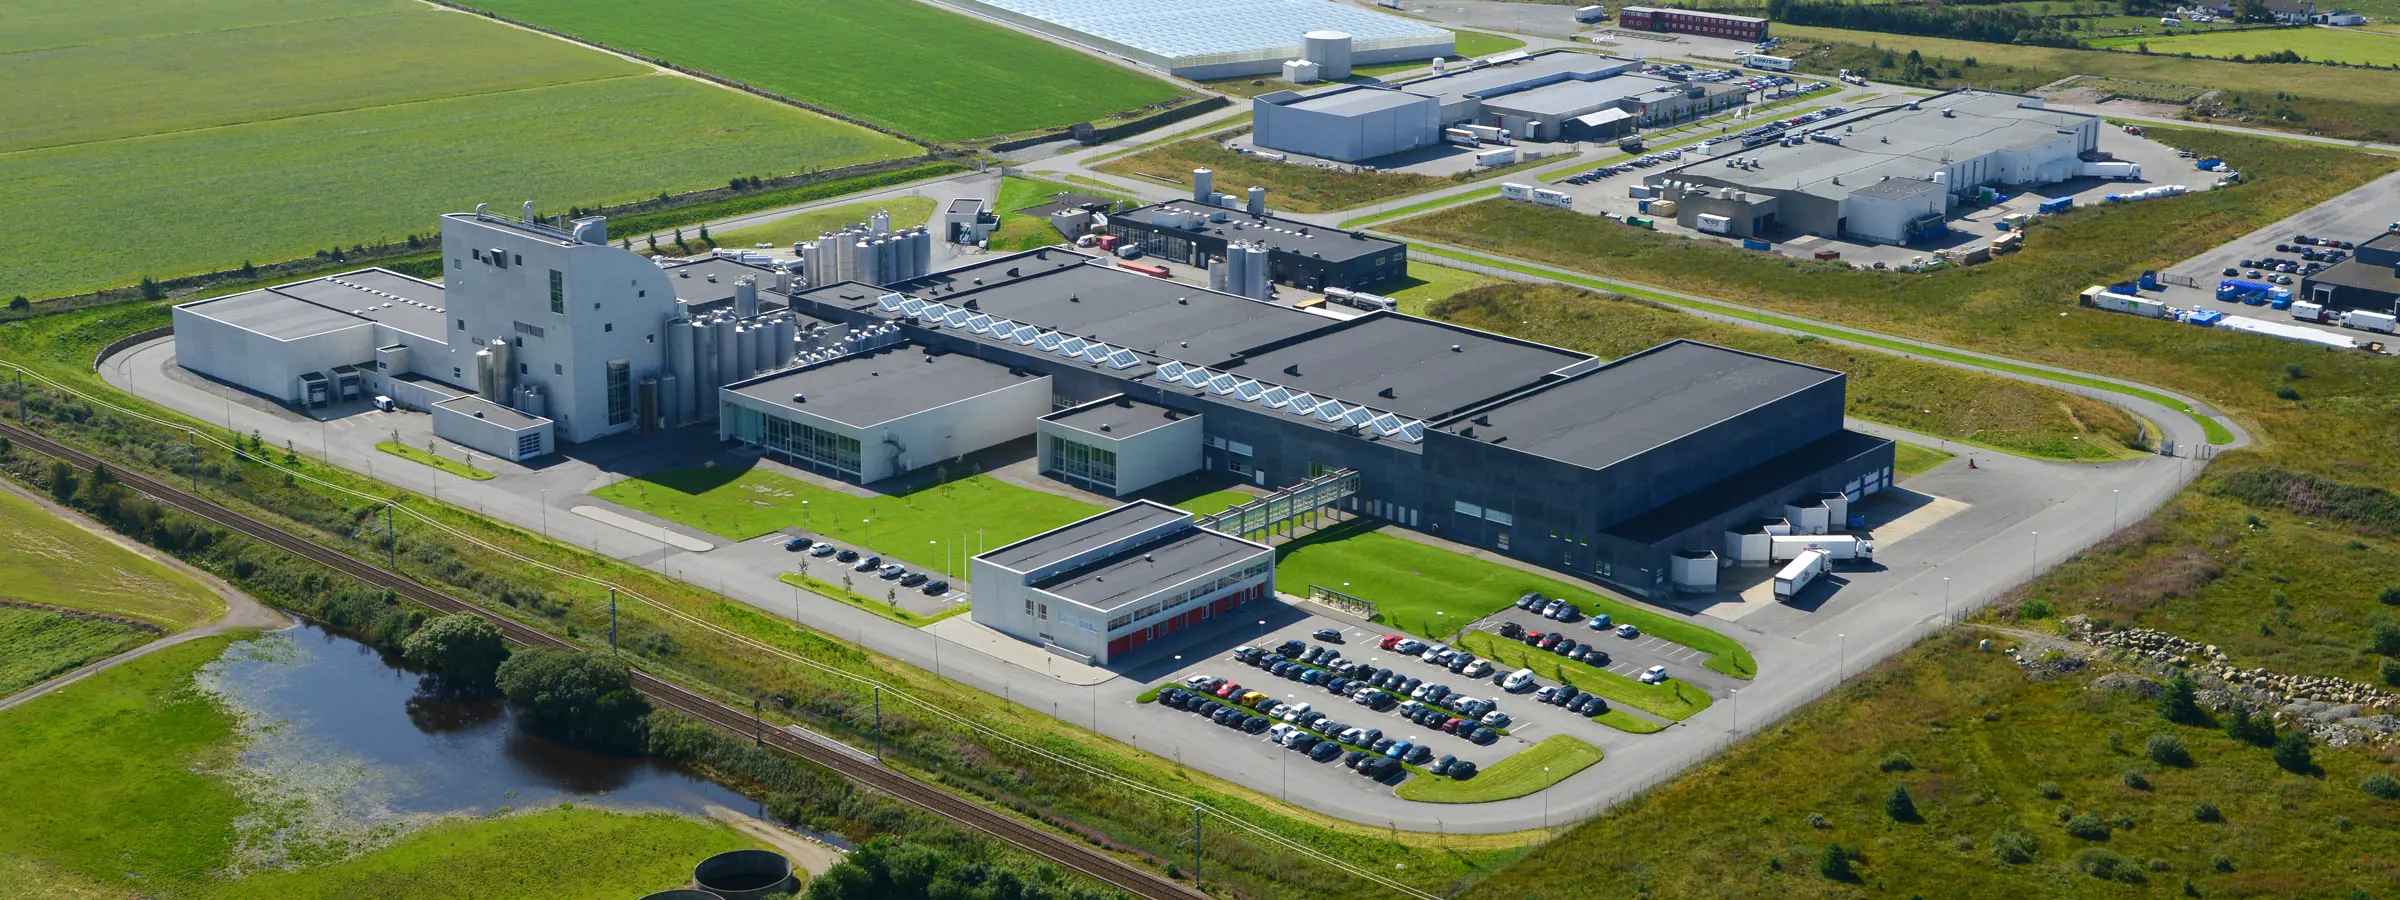 Tine Meieri production site in Norway